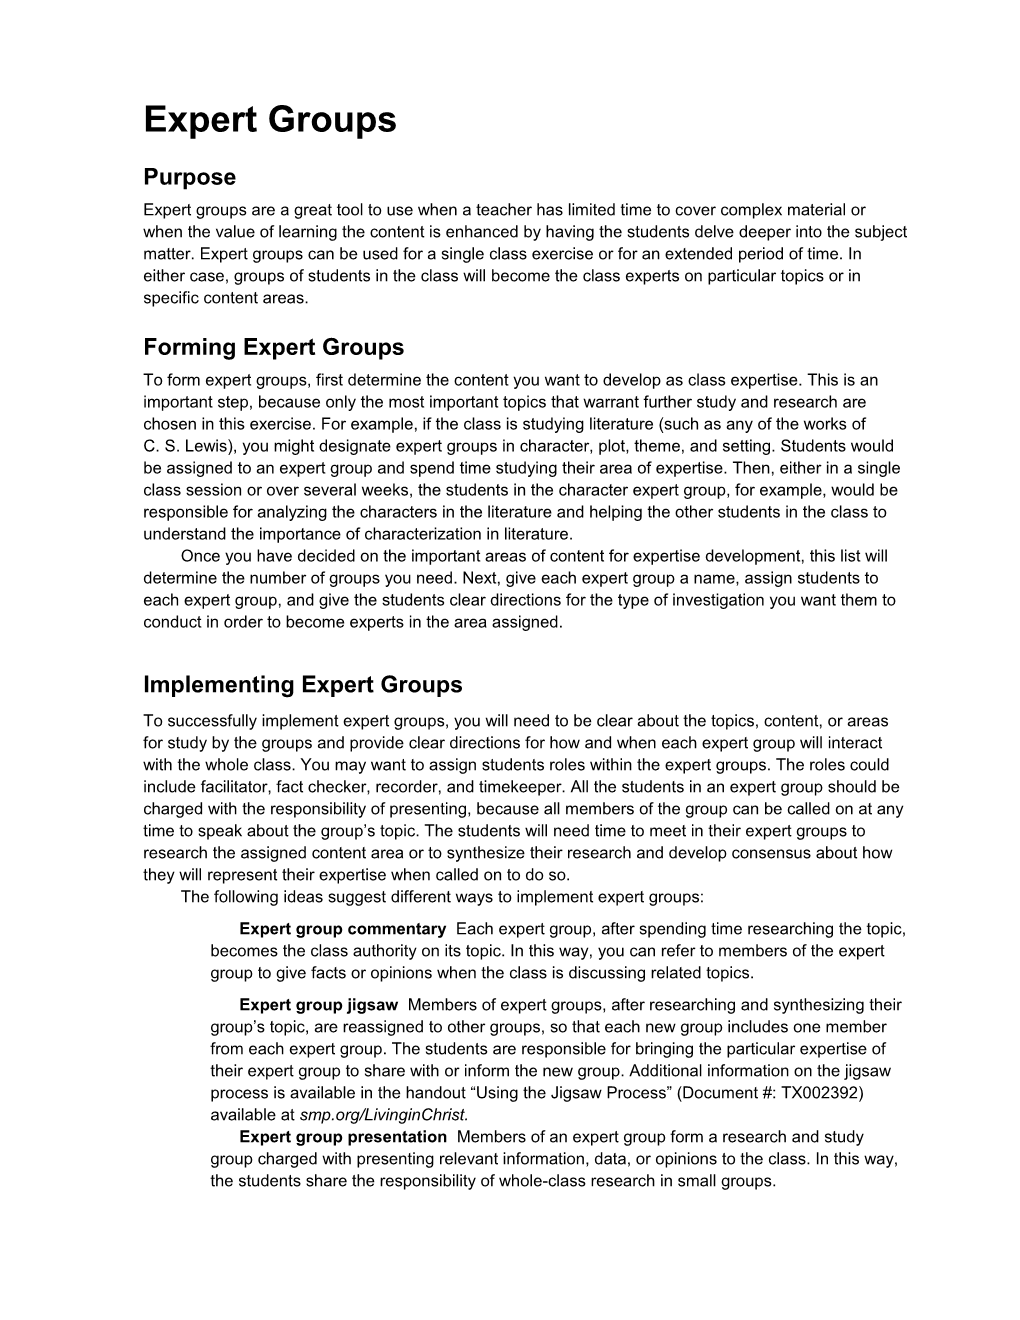 Expert Groupspage 1